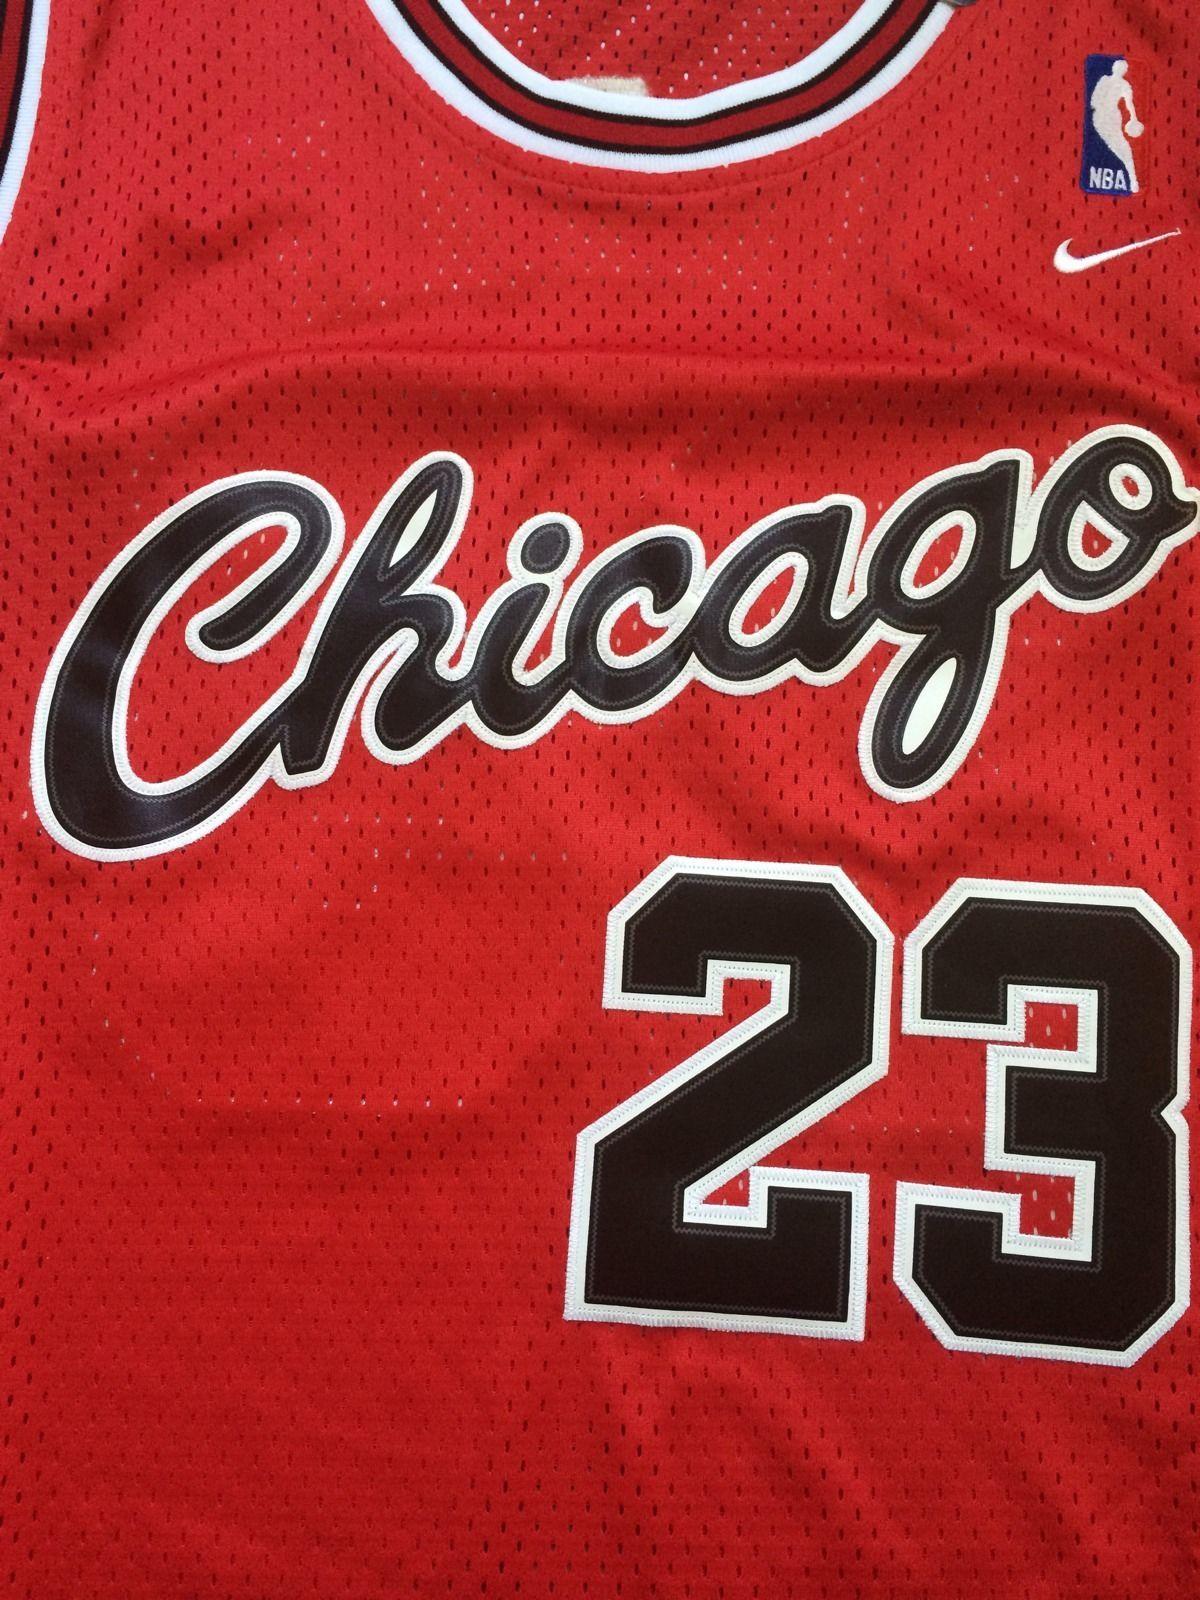 Bulls Cursive Logo - Vintage Gear: Nike Michael Jordan Bulls Rookie Jersey - Air Jordans ...